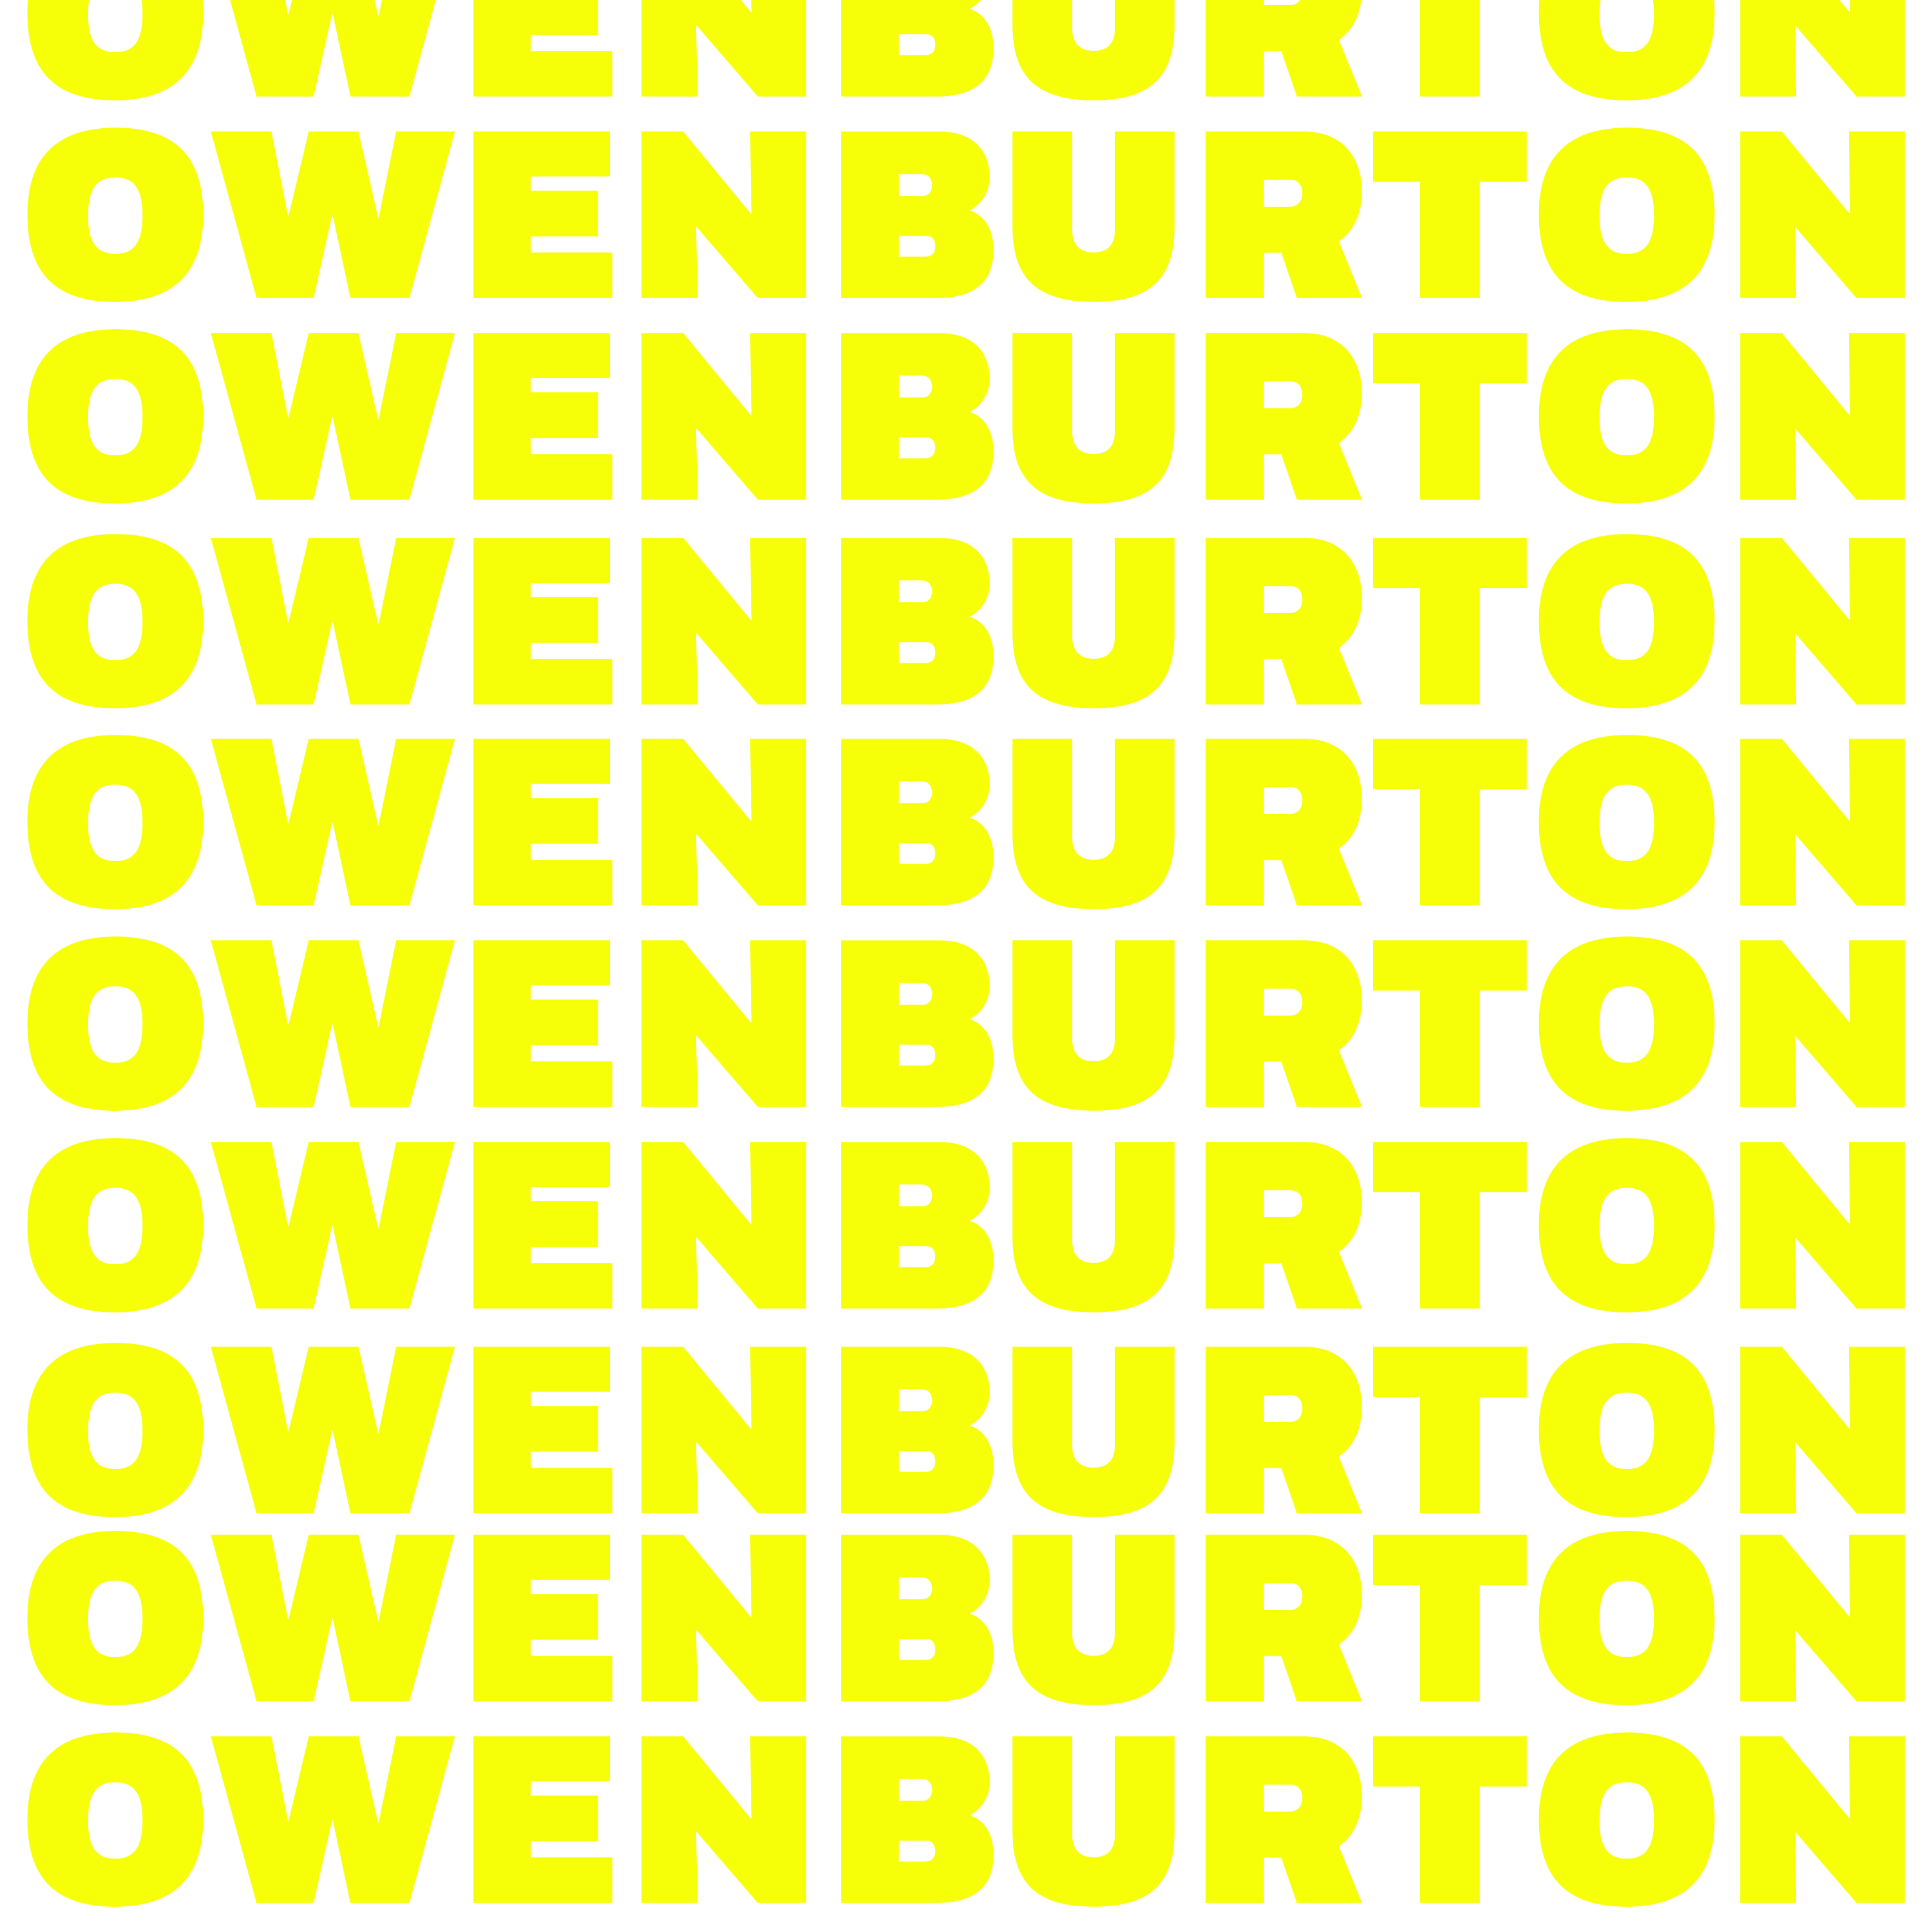 Owen Burton